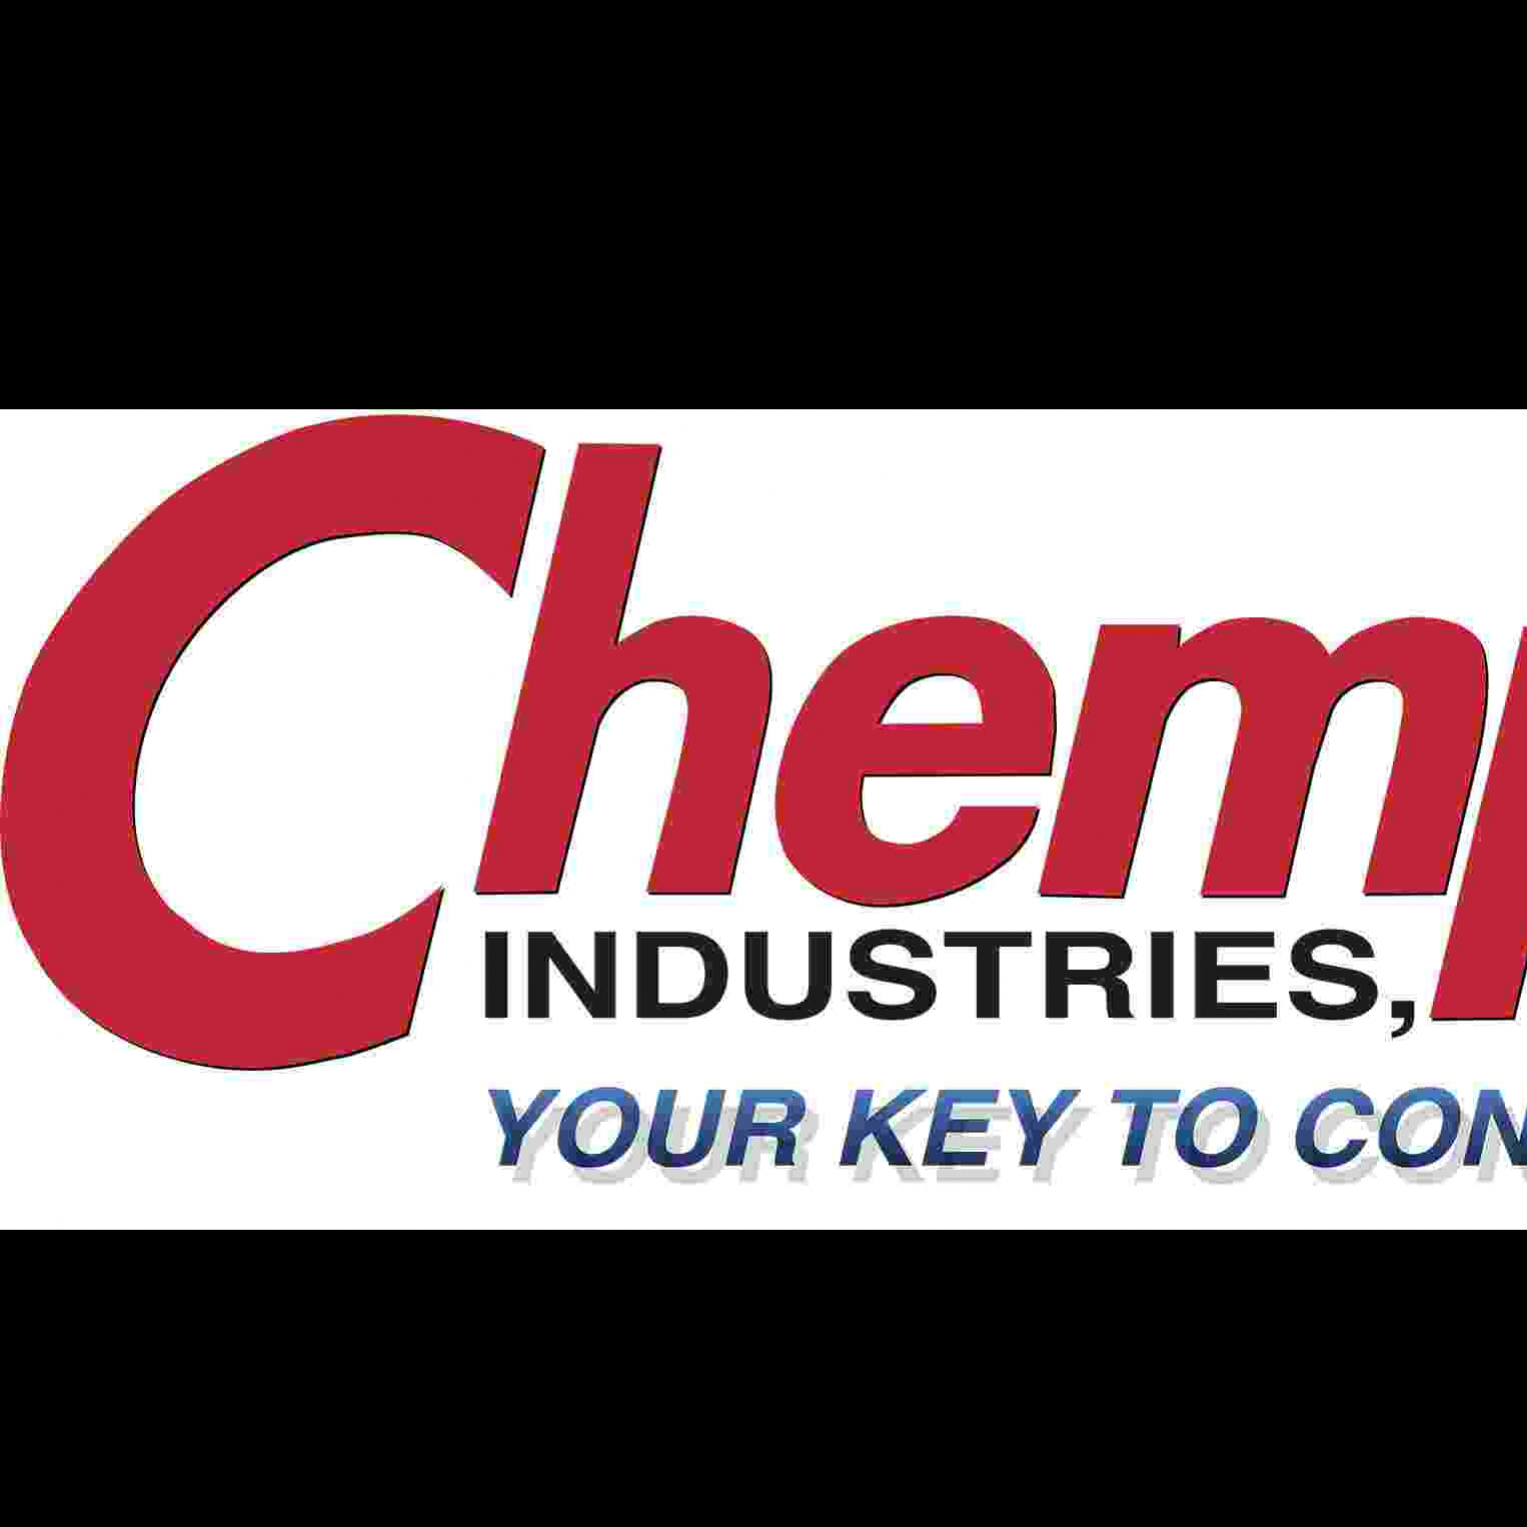 ChemplexIndustries